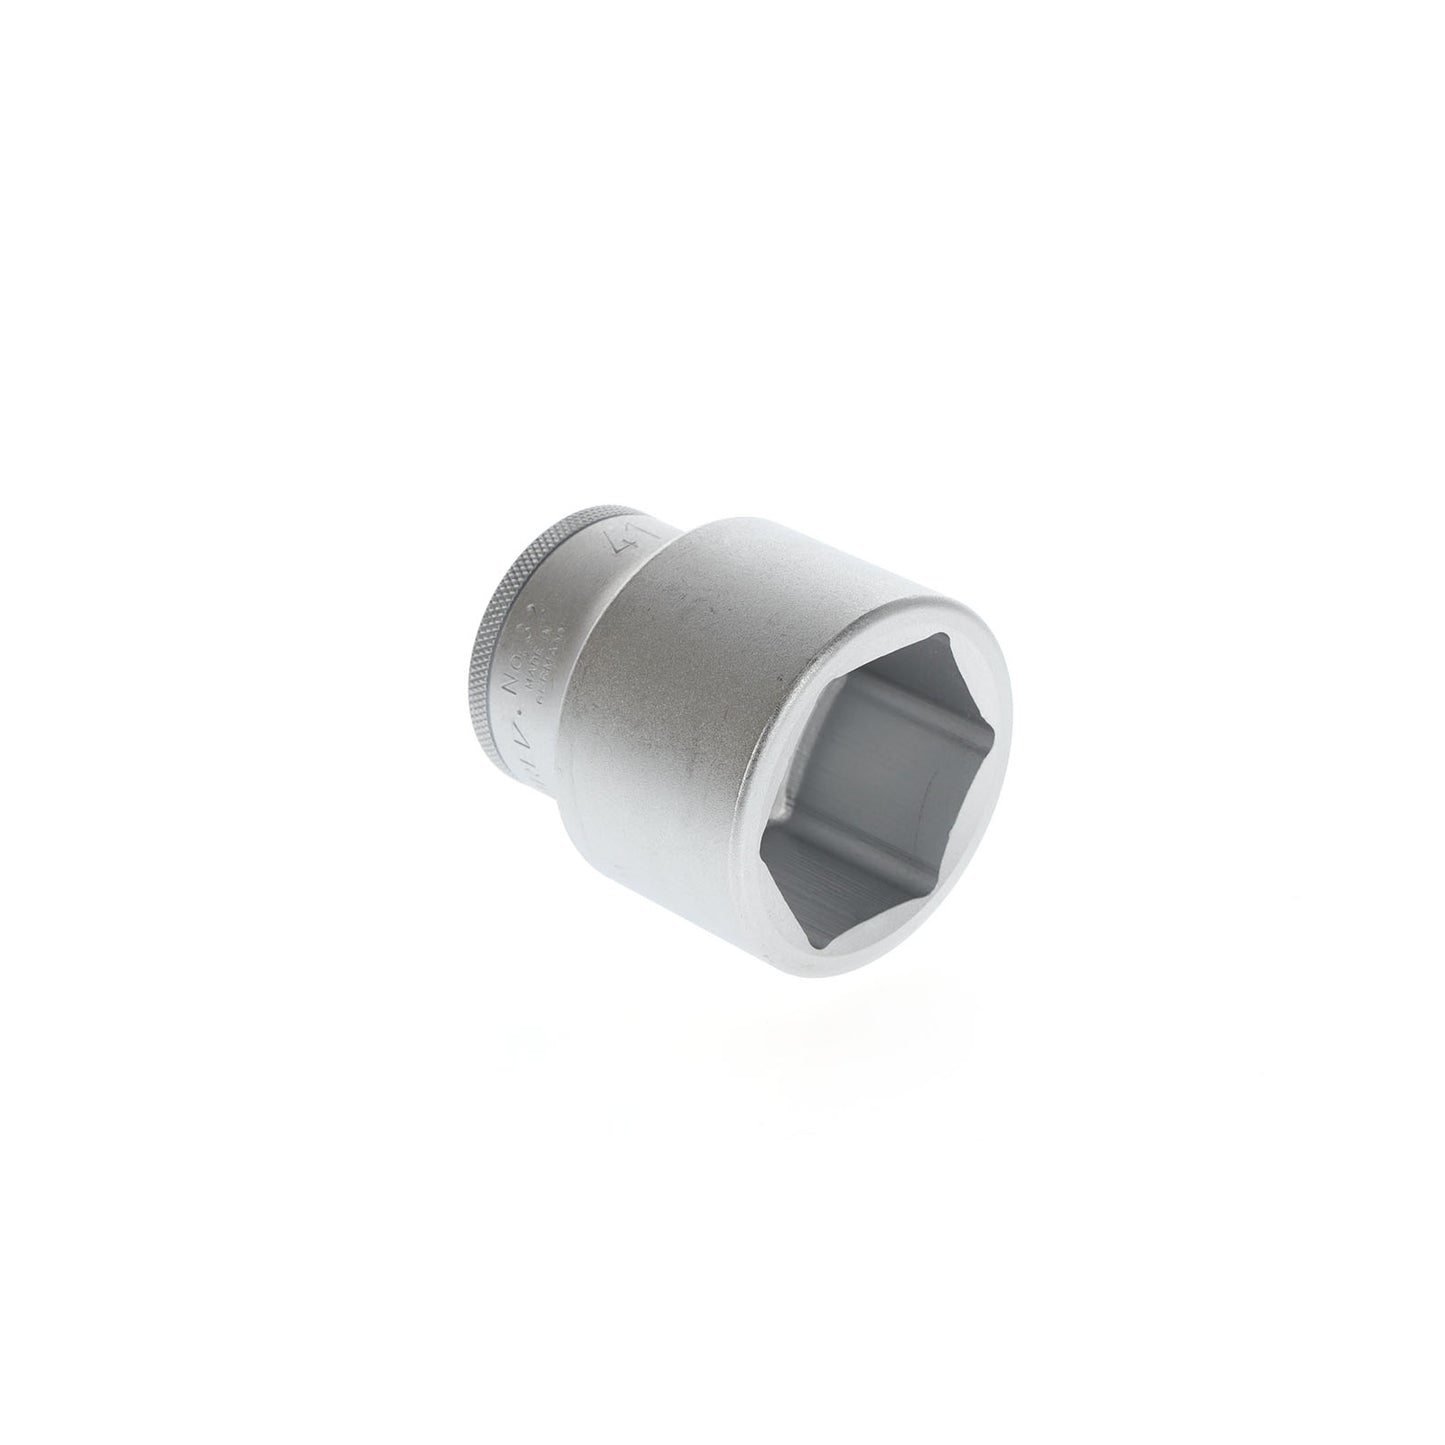 GEDORE 32 41 - Hexagonal socket 3/4", 41 mm (6271190)